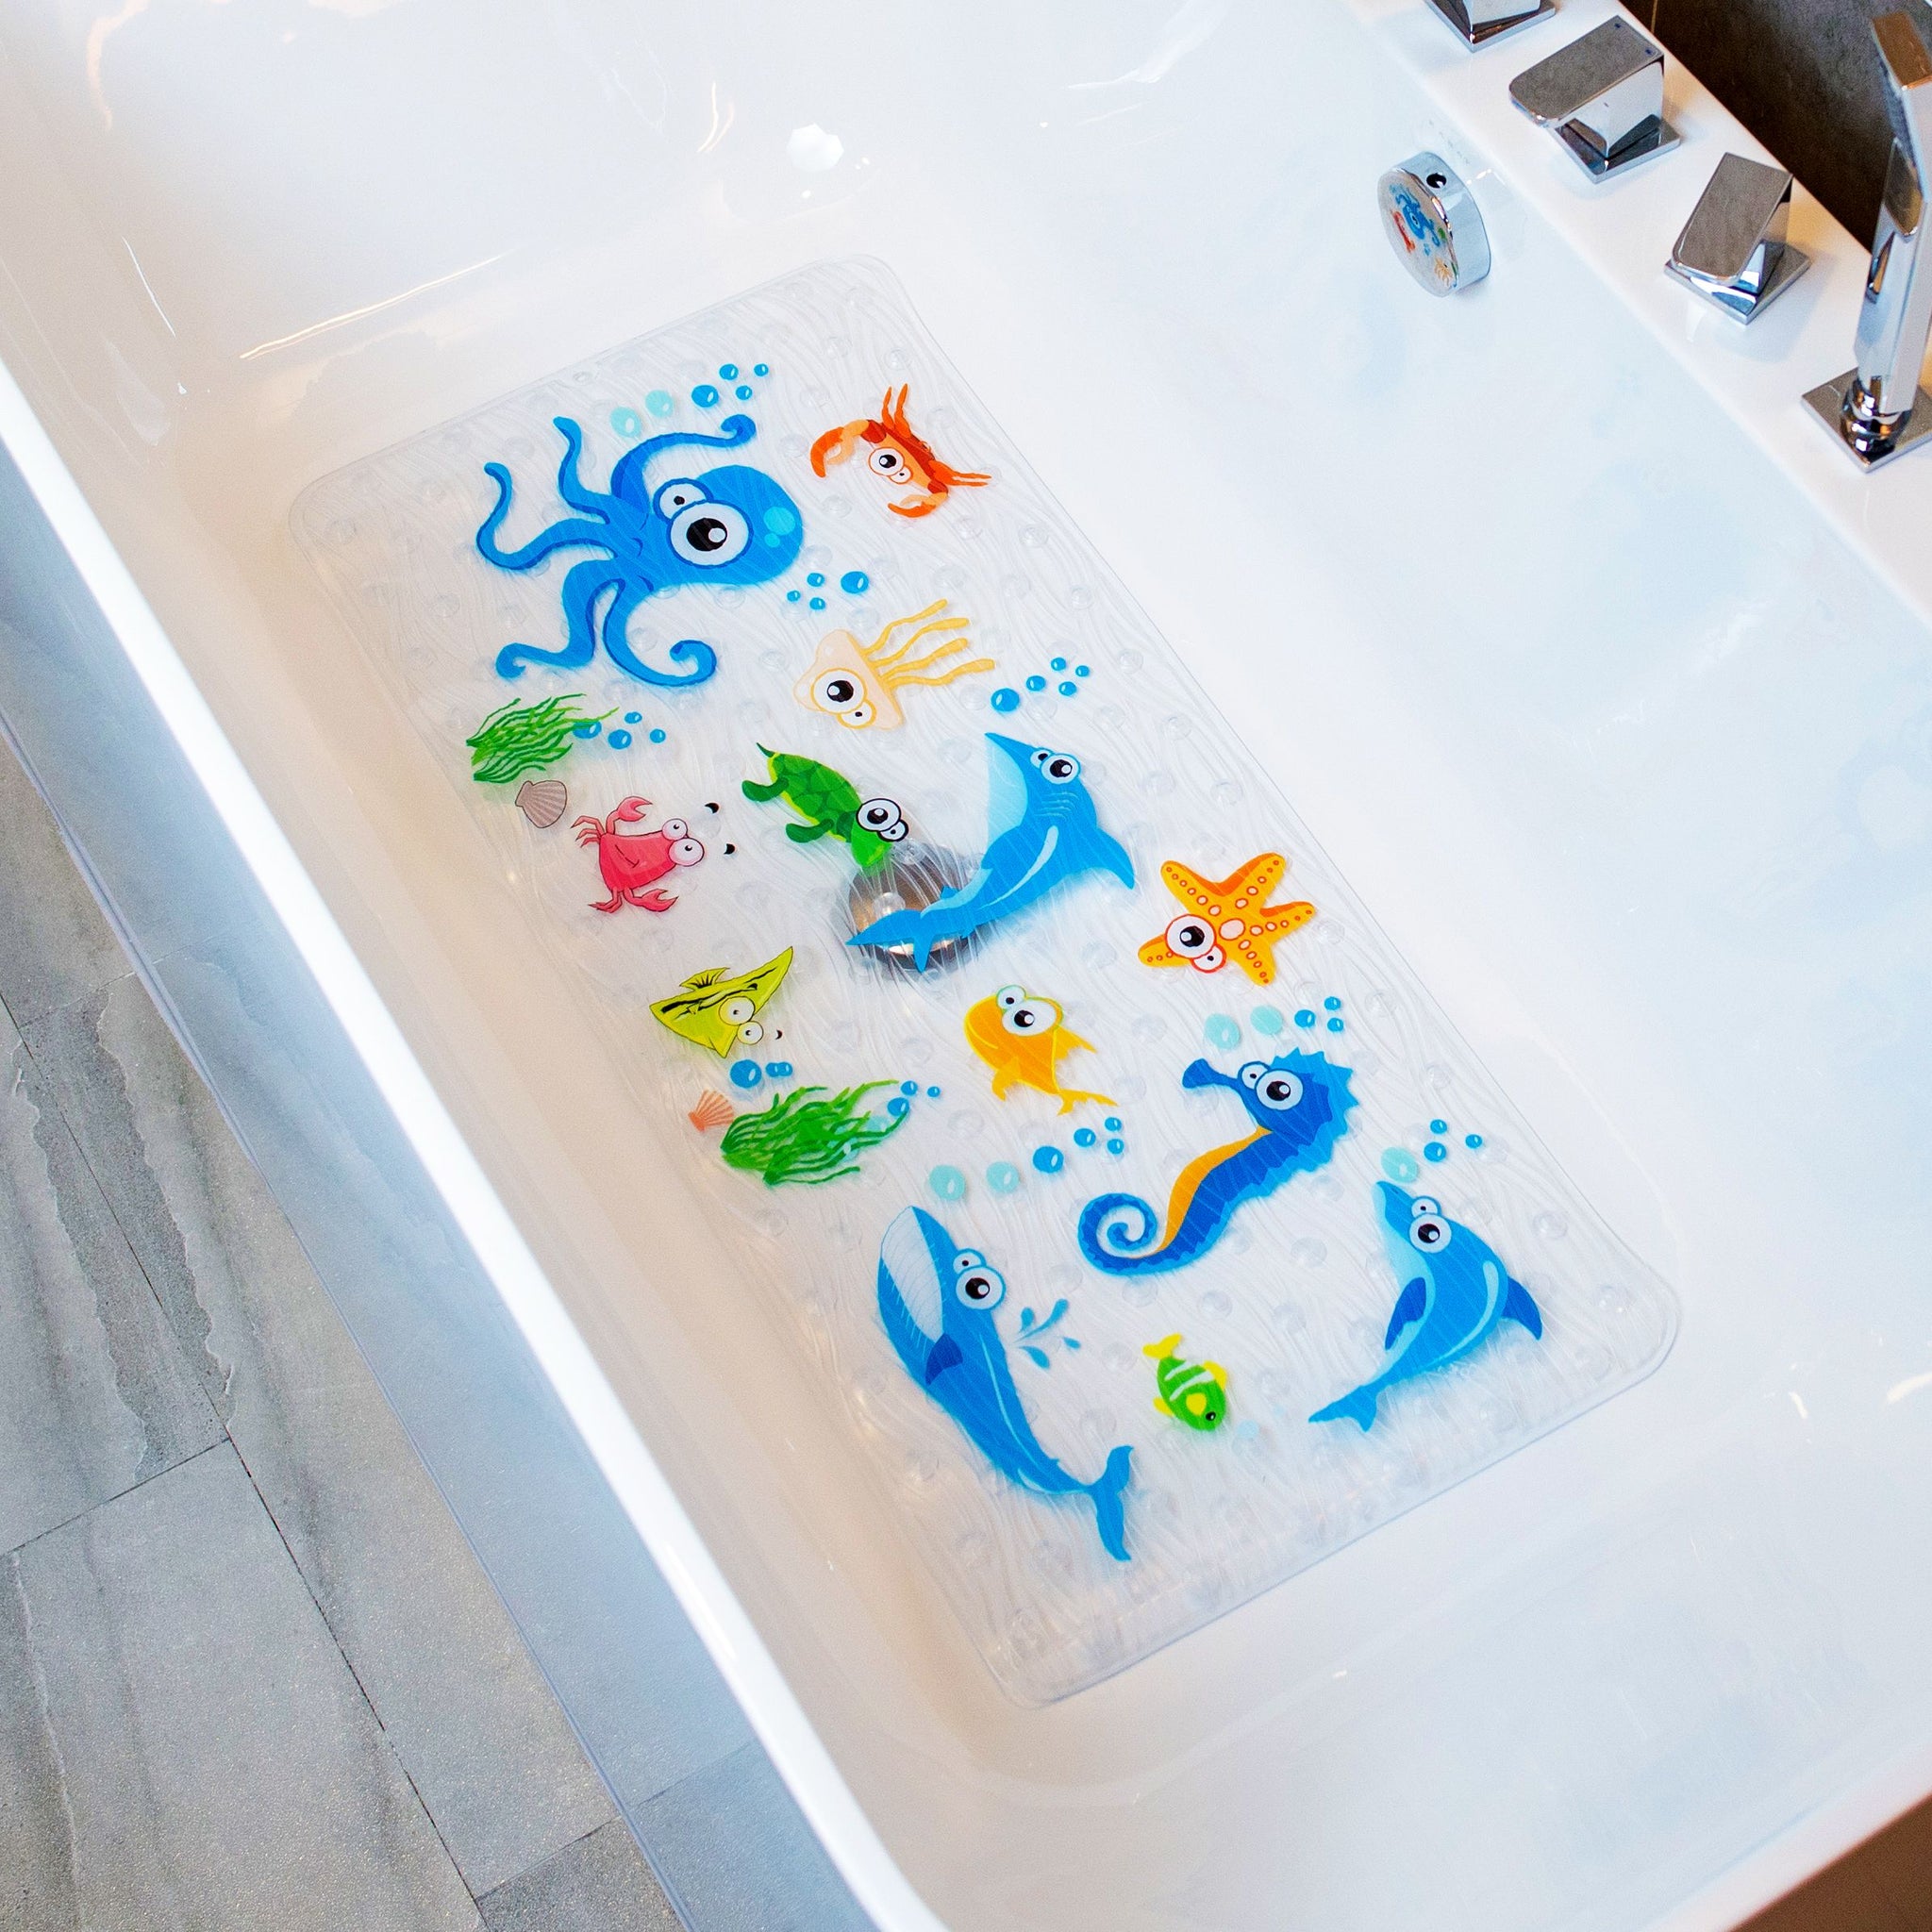 Kids Blue and Green Bath Mat With Happy Blue Elephants – Fun Bathroom Decor  – Ozscape Designs: Bathroom Decor & Bedroom Decor for Kids & You